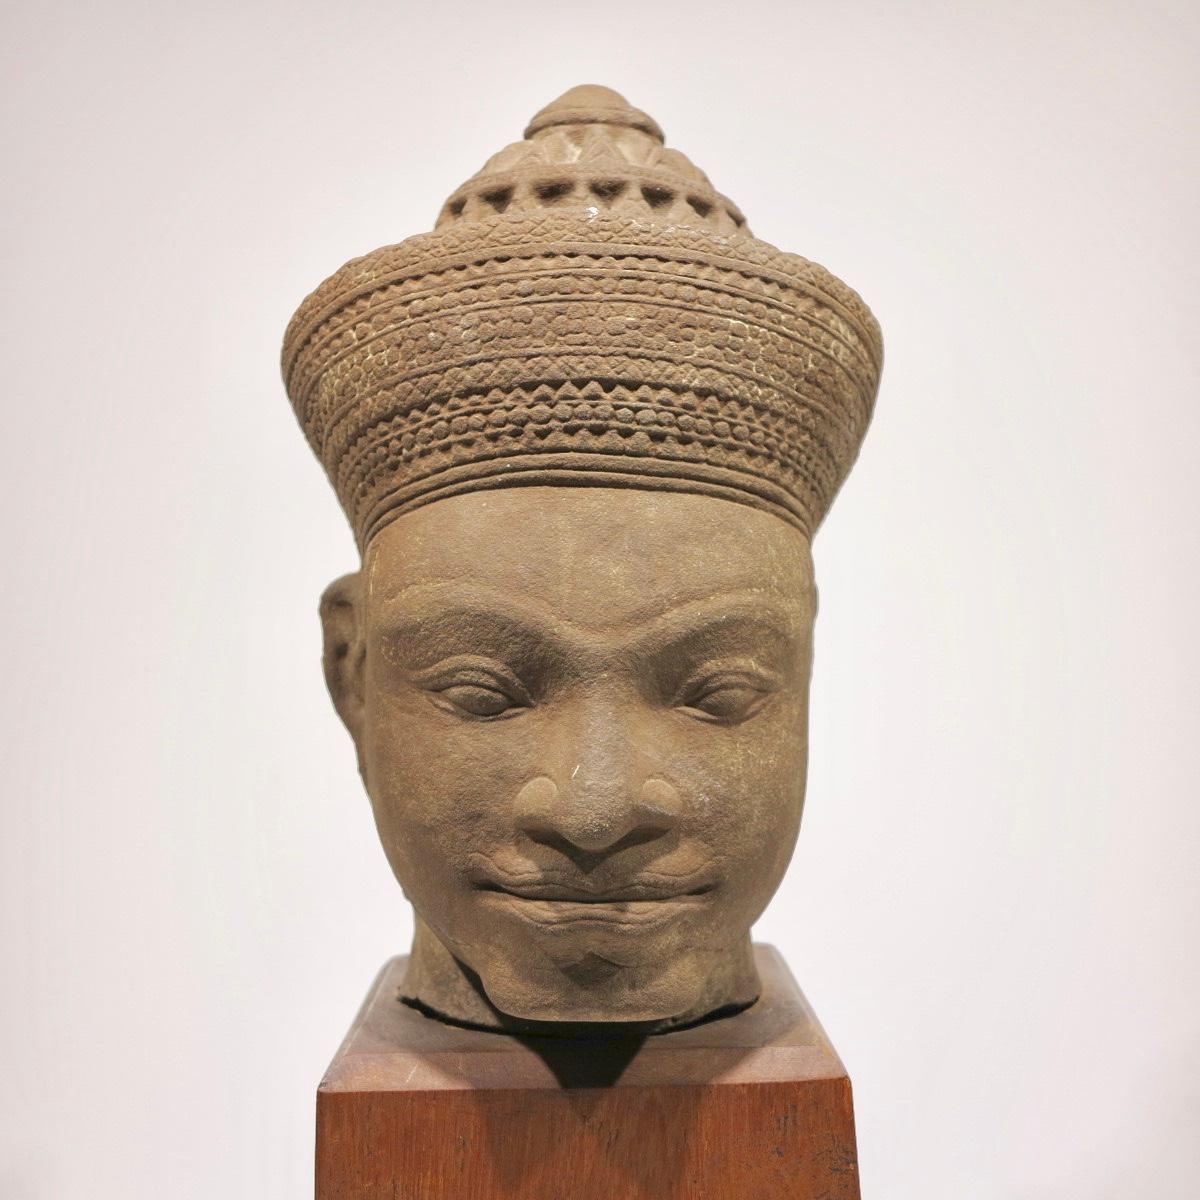 Head of Vishnu, Khmer, Cambodian bust sculpture - Sculpture by Unknown